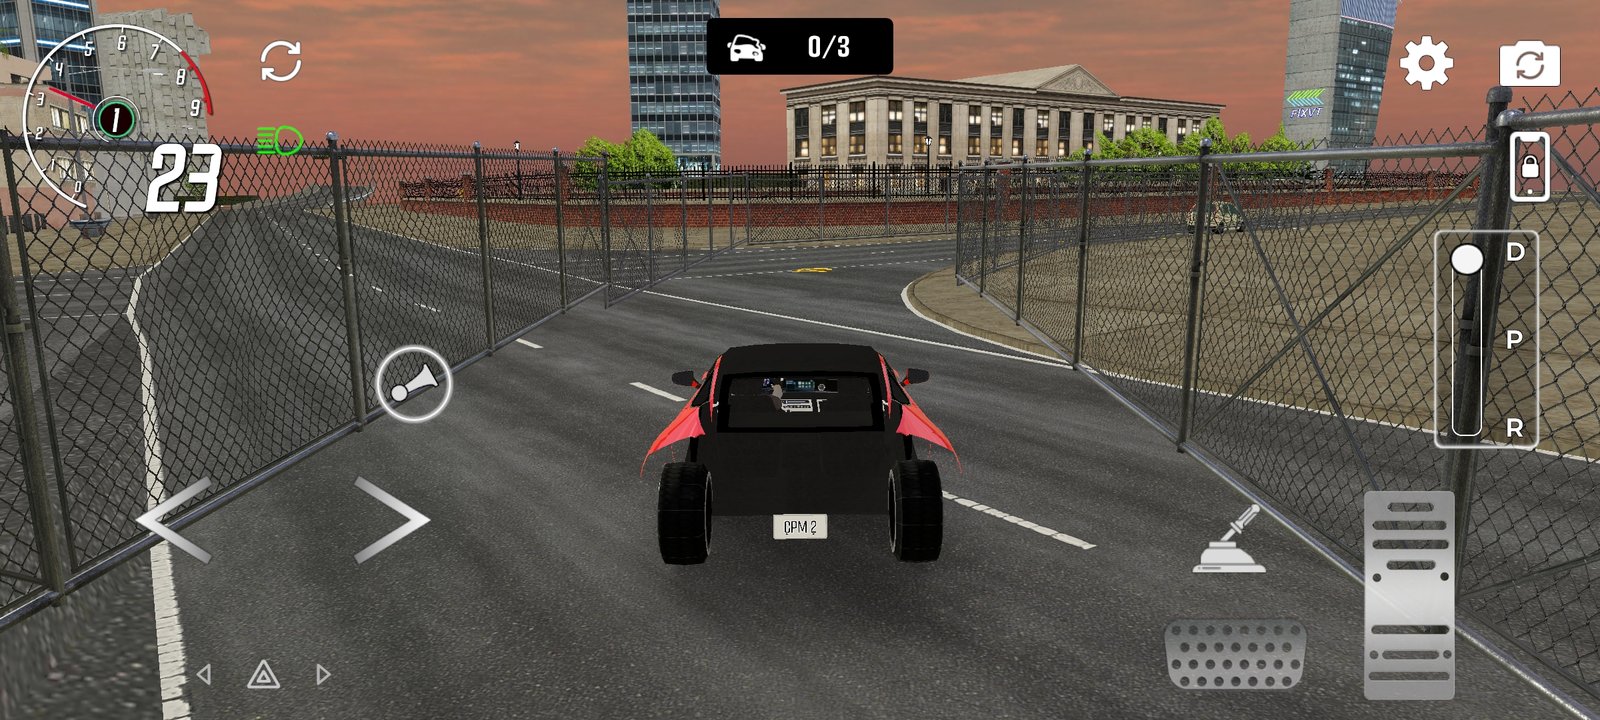 Car Parking Multiplayer Mod Apk 4.8.14.8 Mod Menu Speed Hack 